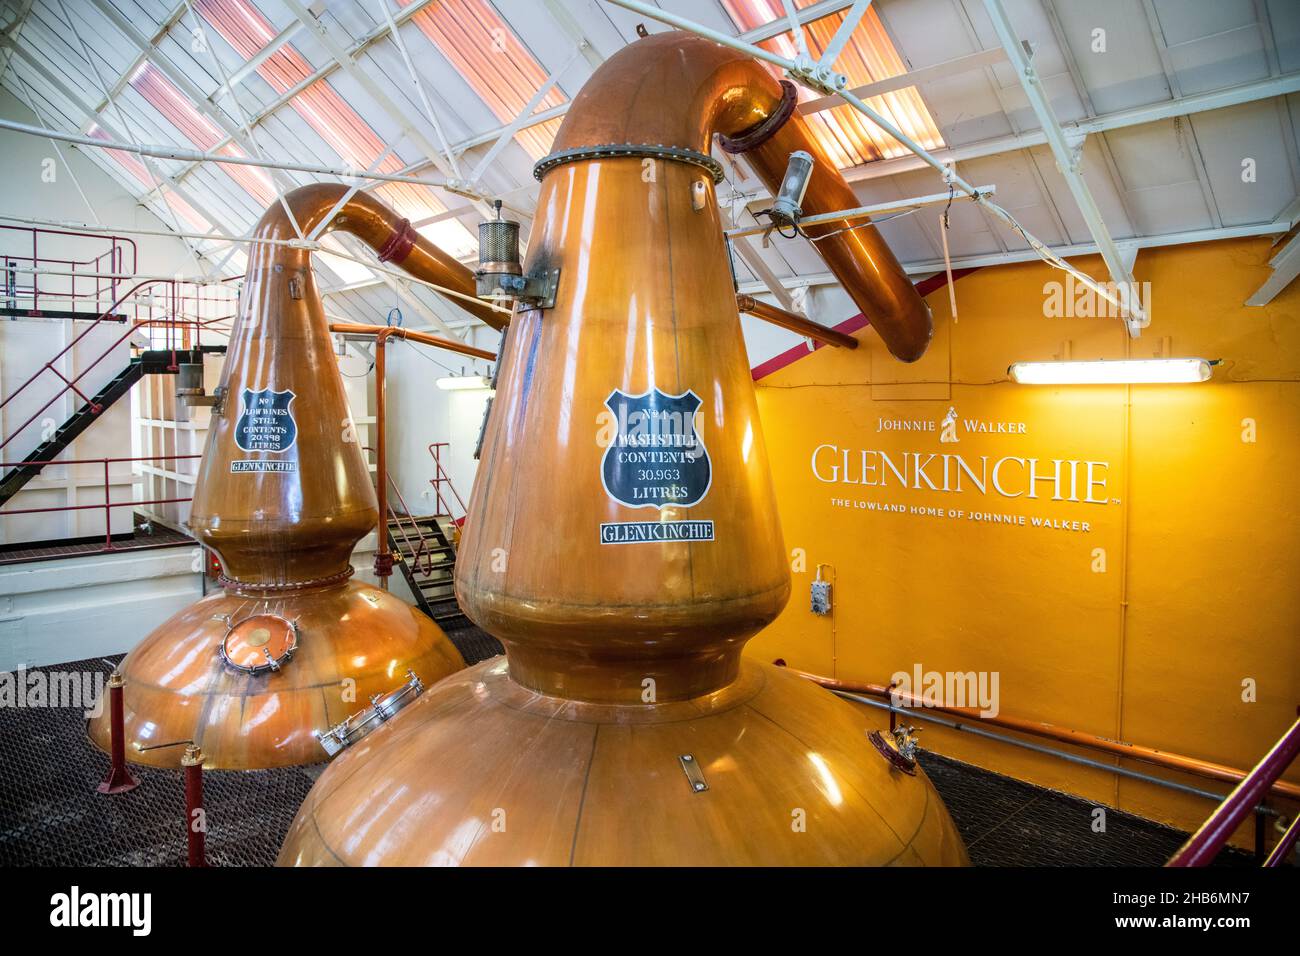 Two pot stills for distilling the whisky at the Glenkinchie Whisky Distillery in East Lothian, Scotland, UK Stock Photo